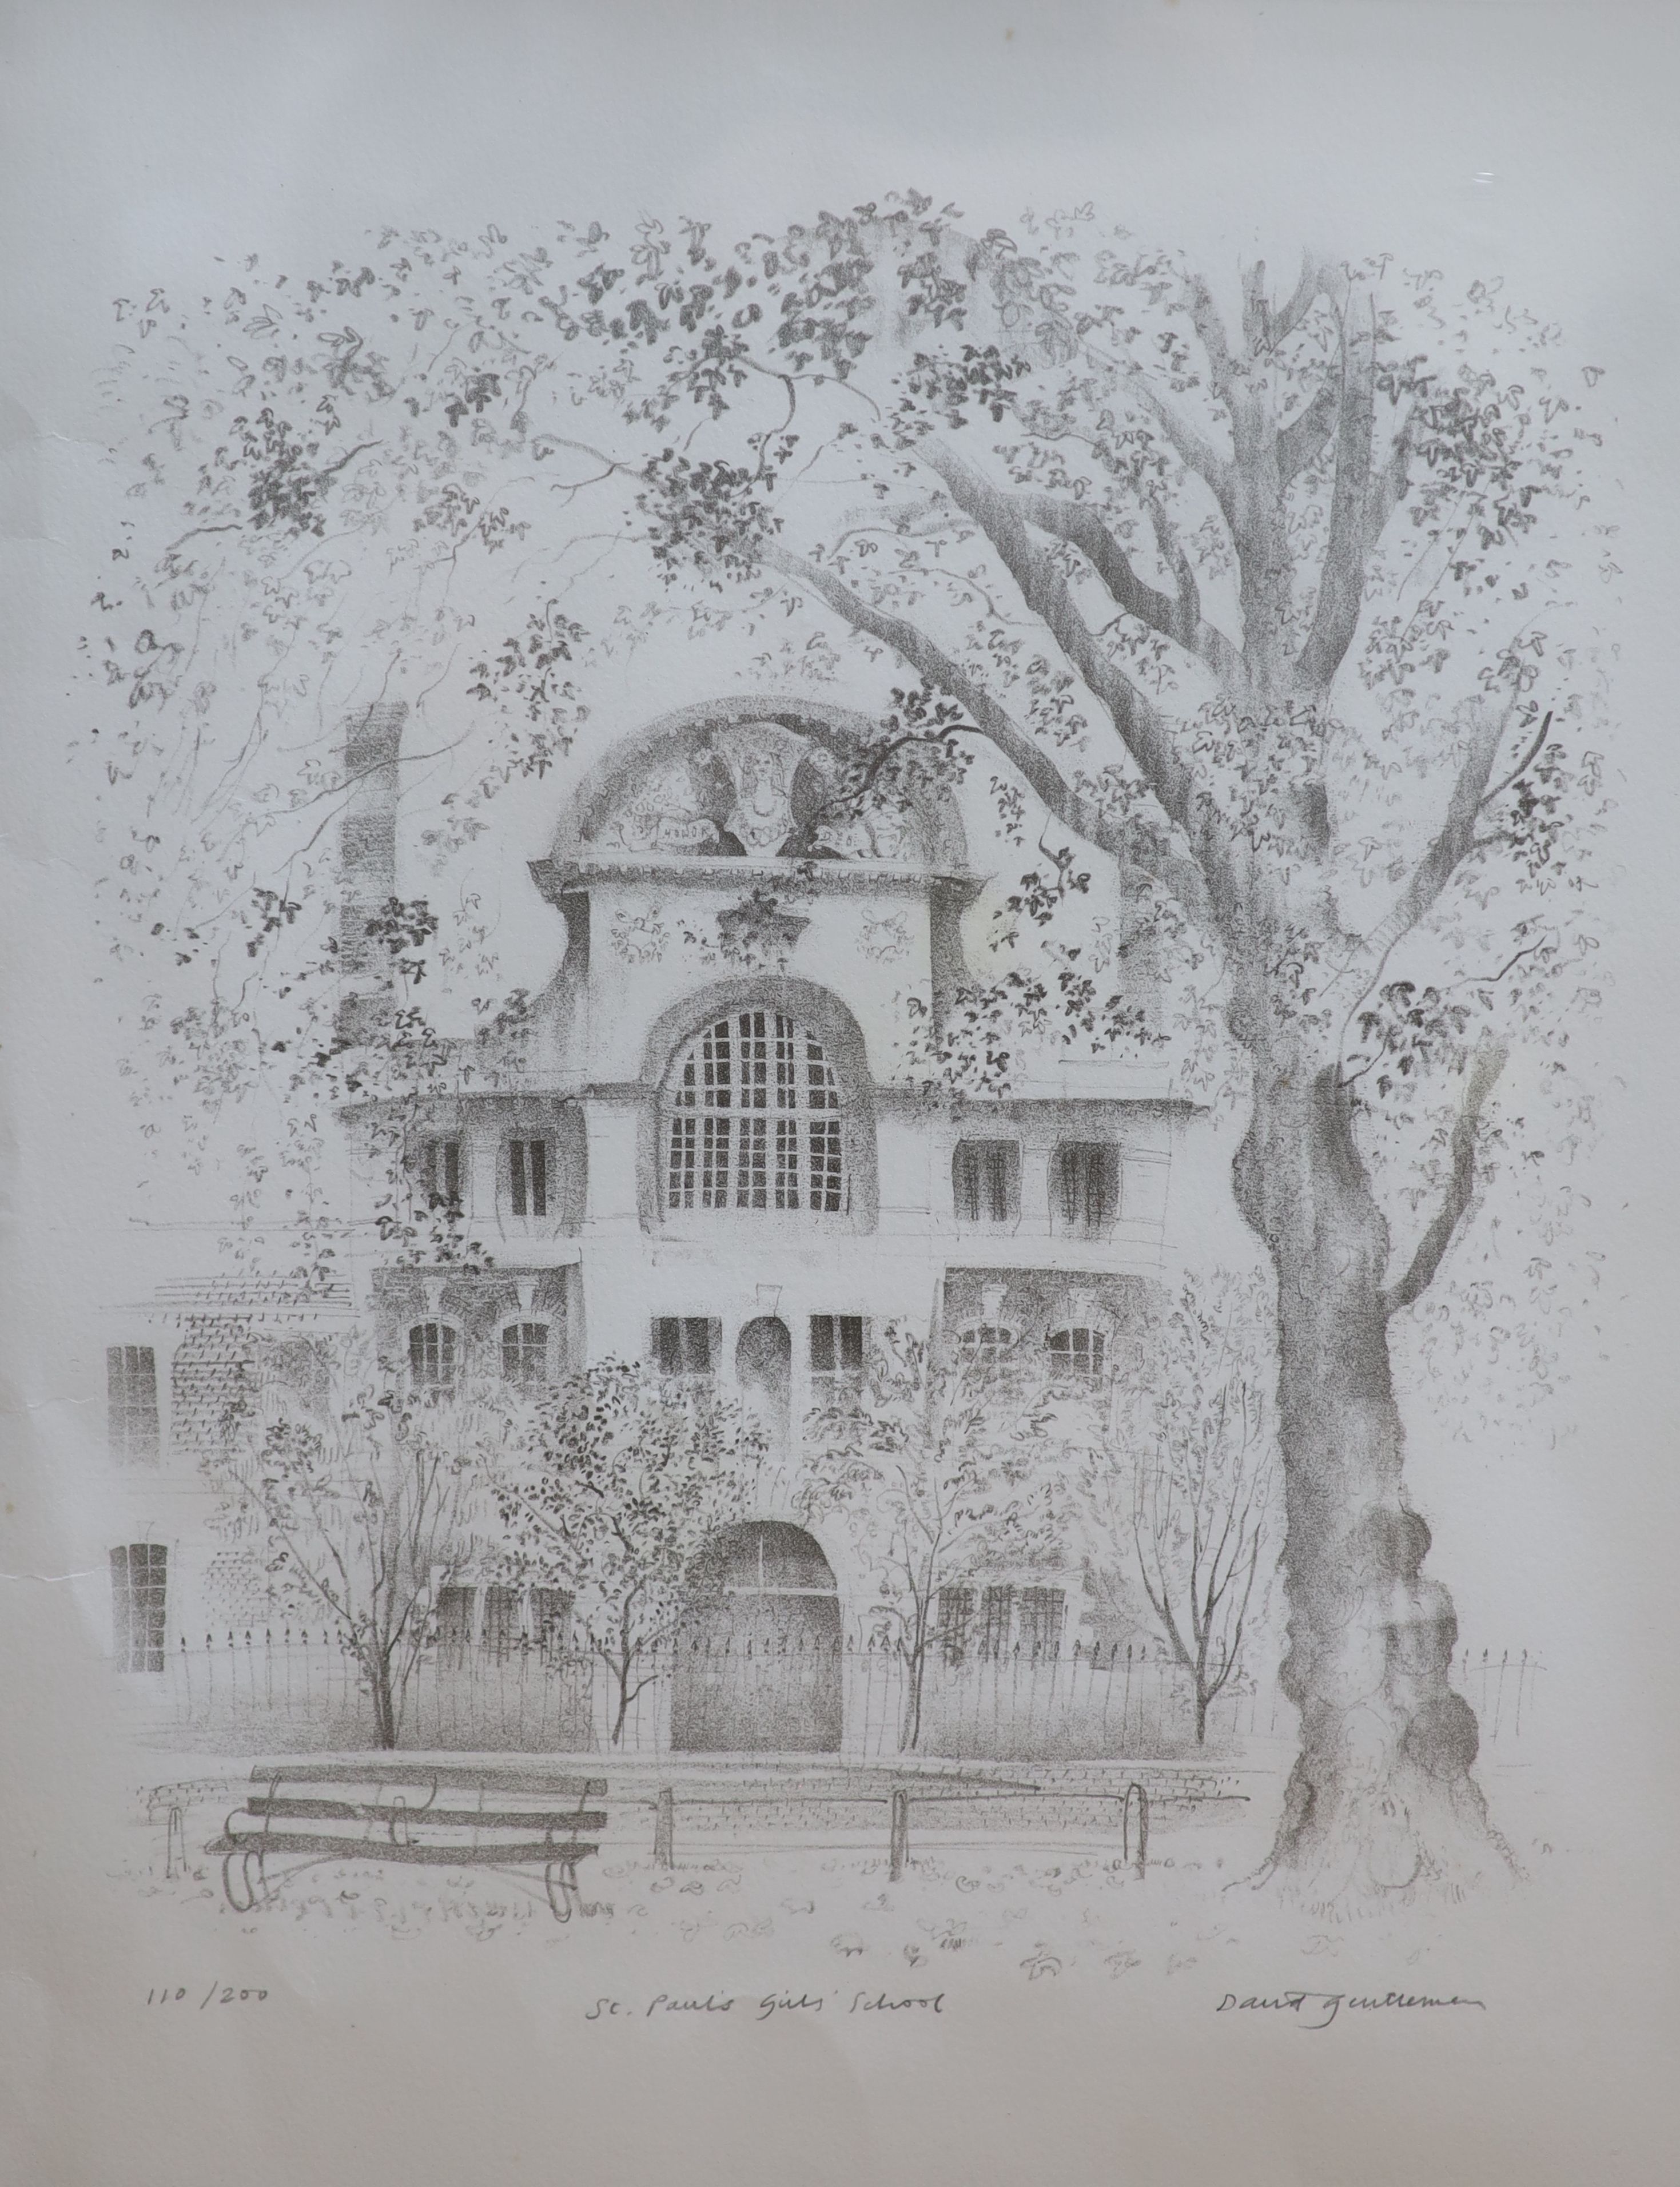 David William Gentleman RDI (b.1930), limited edition print, St Paul's Girls School, London, signed in pencil, 110/200, 44 x 34cm